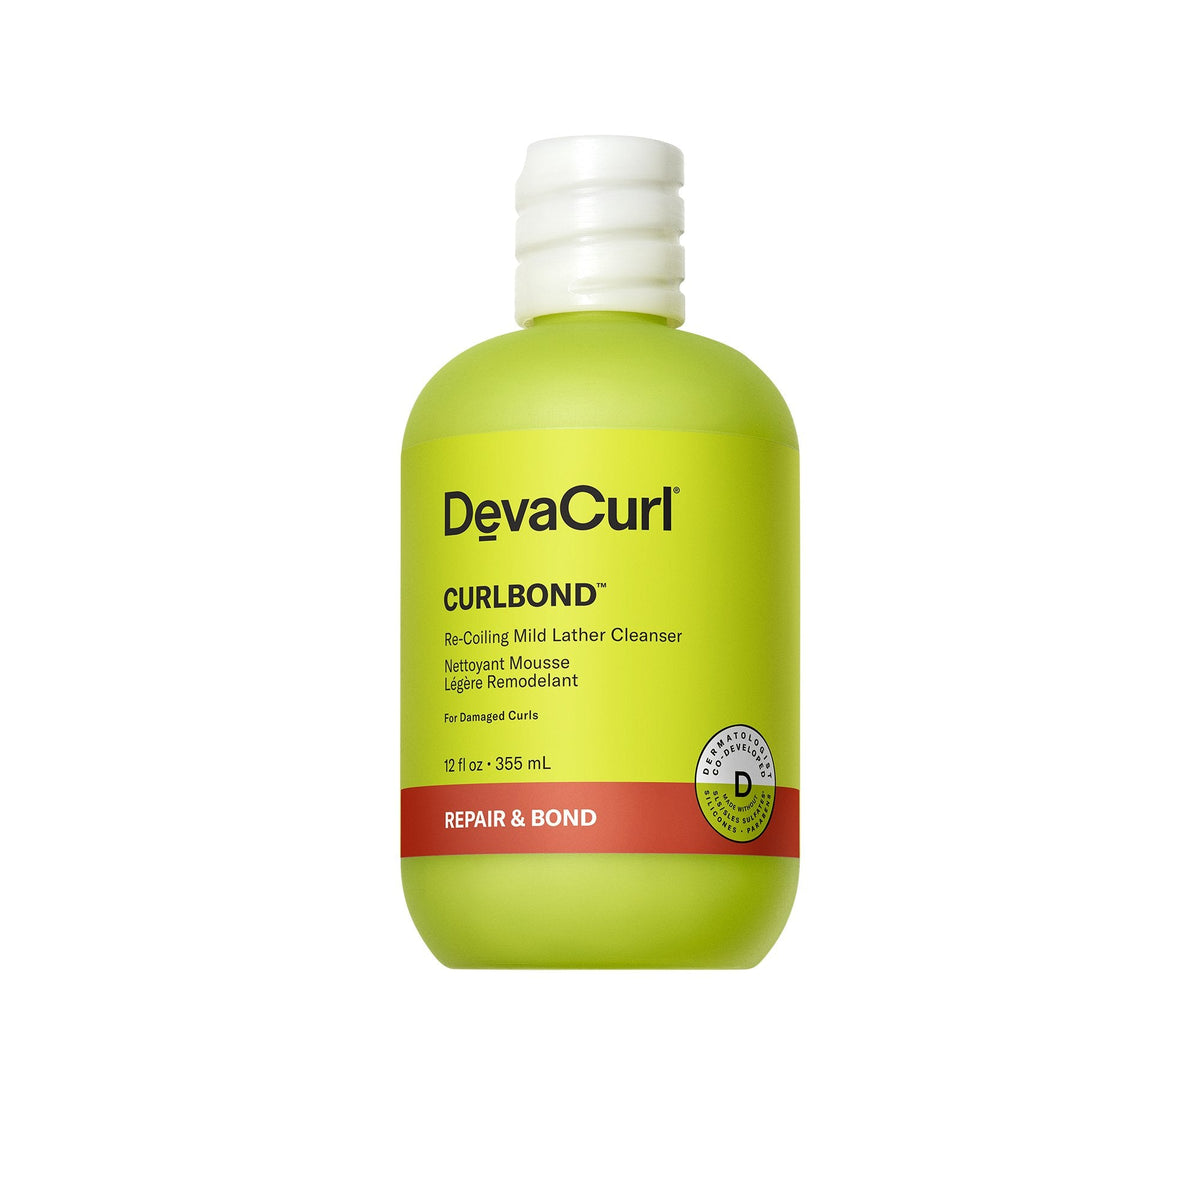 New! DevaCurl CurlBond Cleanser - 12oz - by Deva Curl |ProCare Outlet|